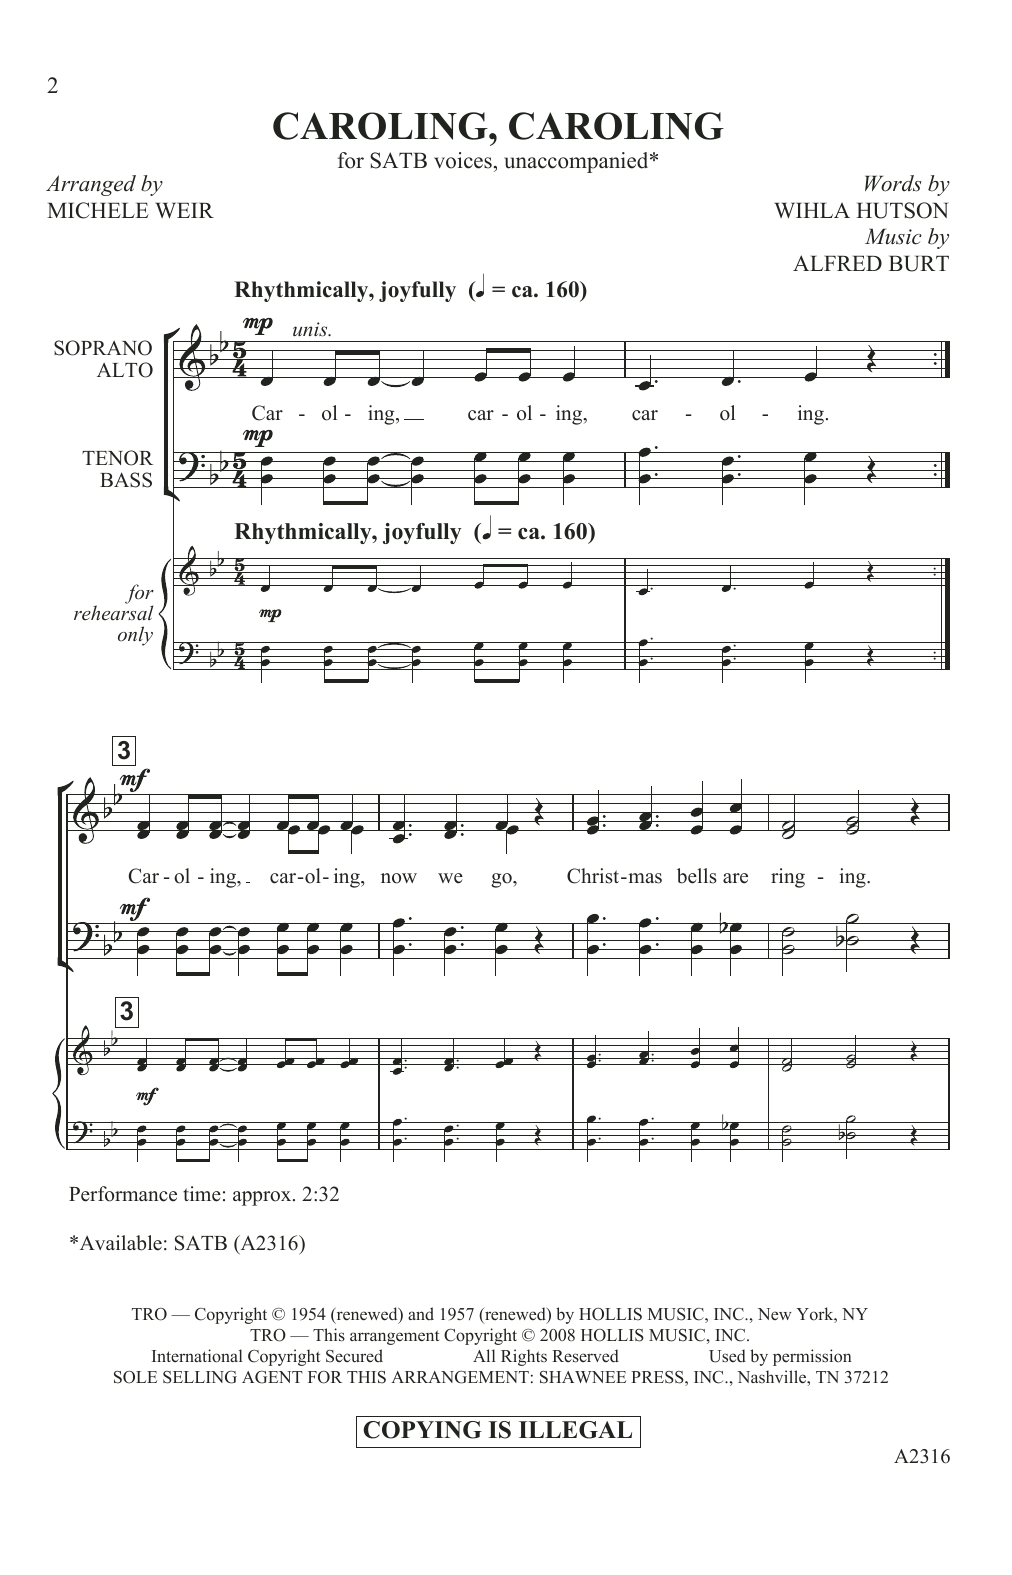 Alfred Burt & Wihla Hutson Caroling, Caroling (arr. Michele Weir) Sheet Music Notes & Chords for SATB Choir - Download or Print PDF